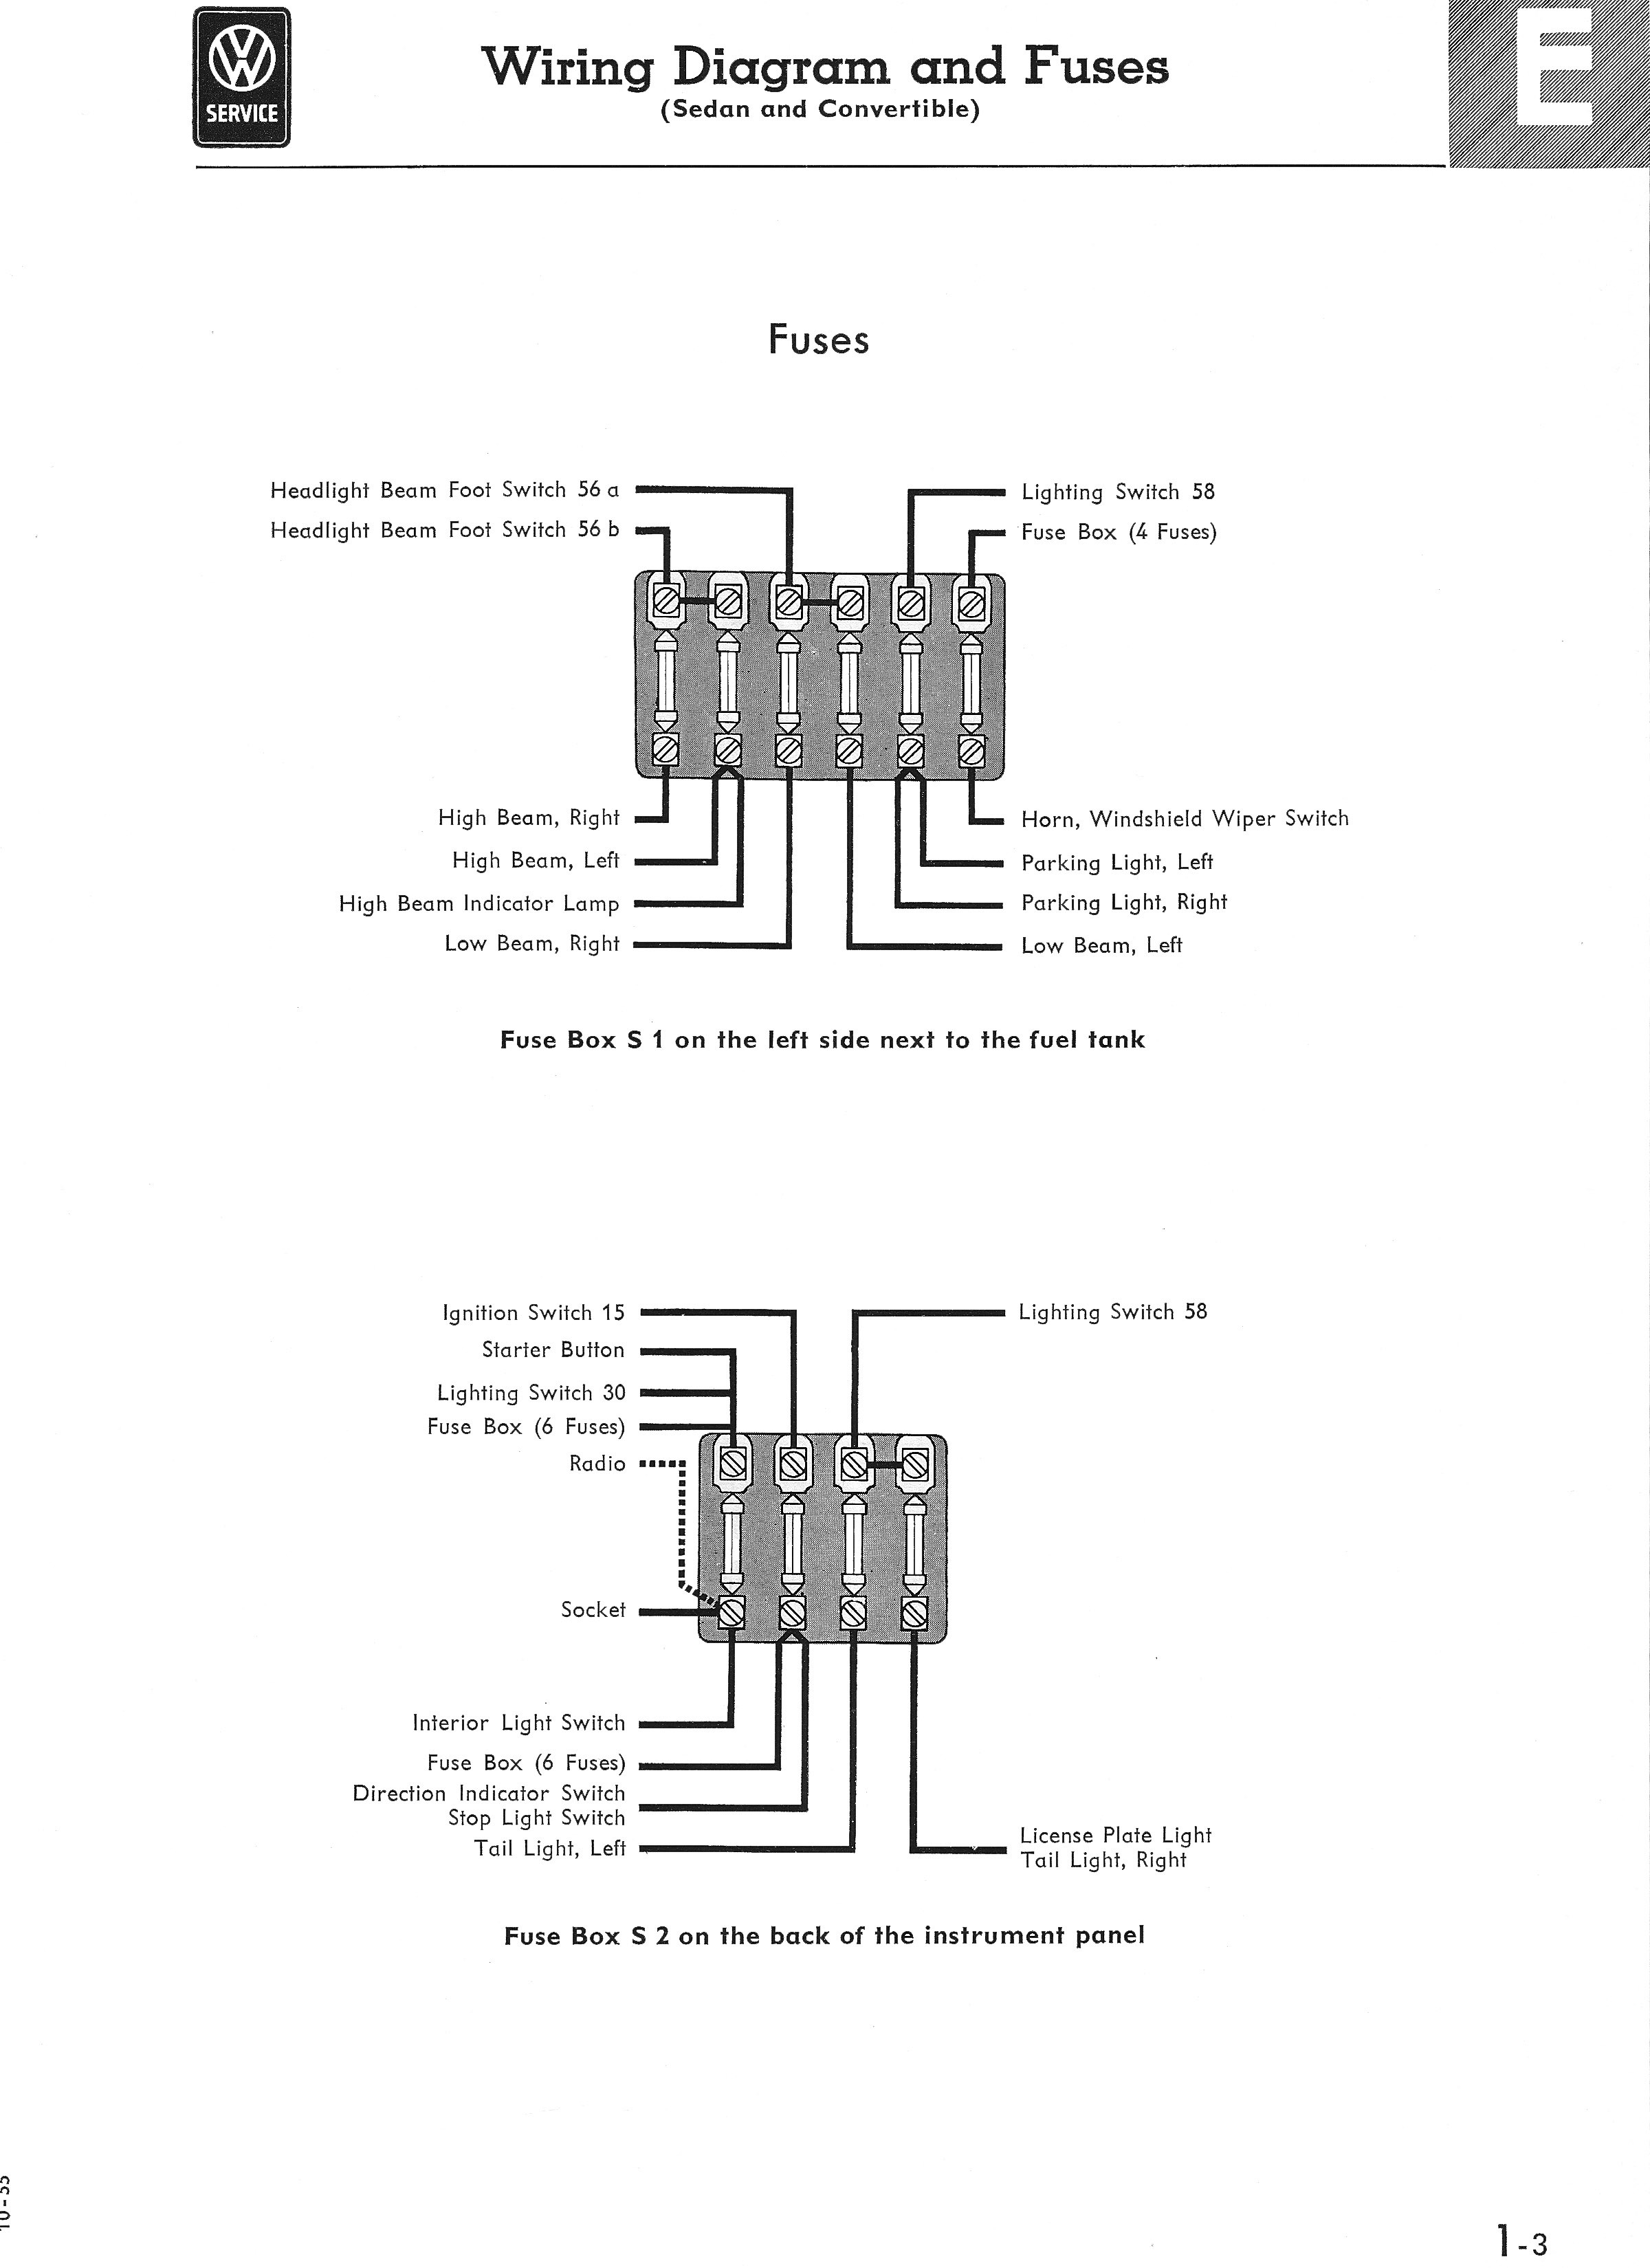 2000 Volkswagen Passat Engine Diagram 1967 Vw Fuse Box Diagram Experts Wiring Diagram • Of 2000 Volkswagen Passat Engine Diagram